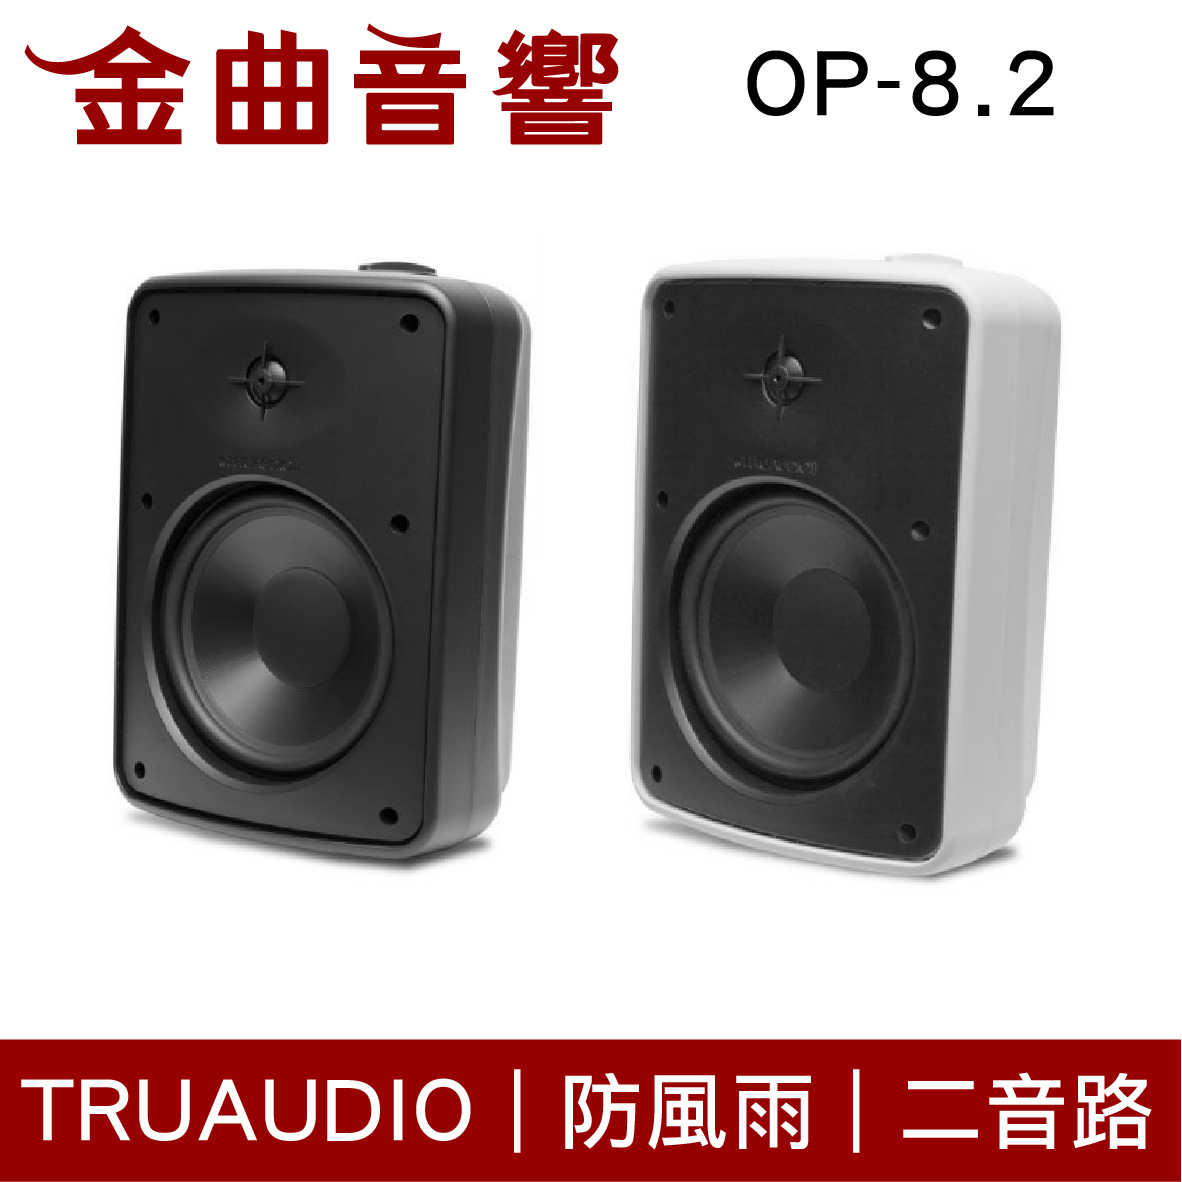 Truaudio OP-8.2 戶外 防風雨 揚聲器 | 金曲音響